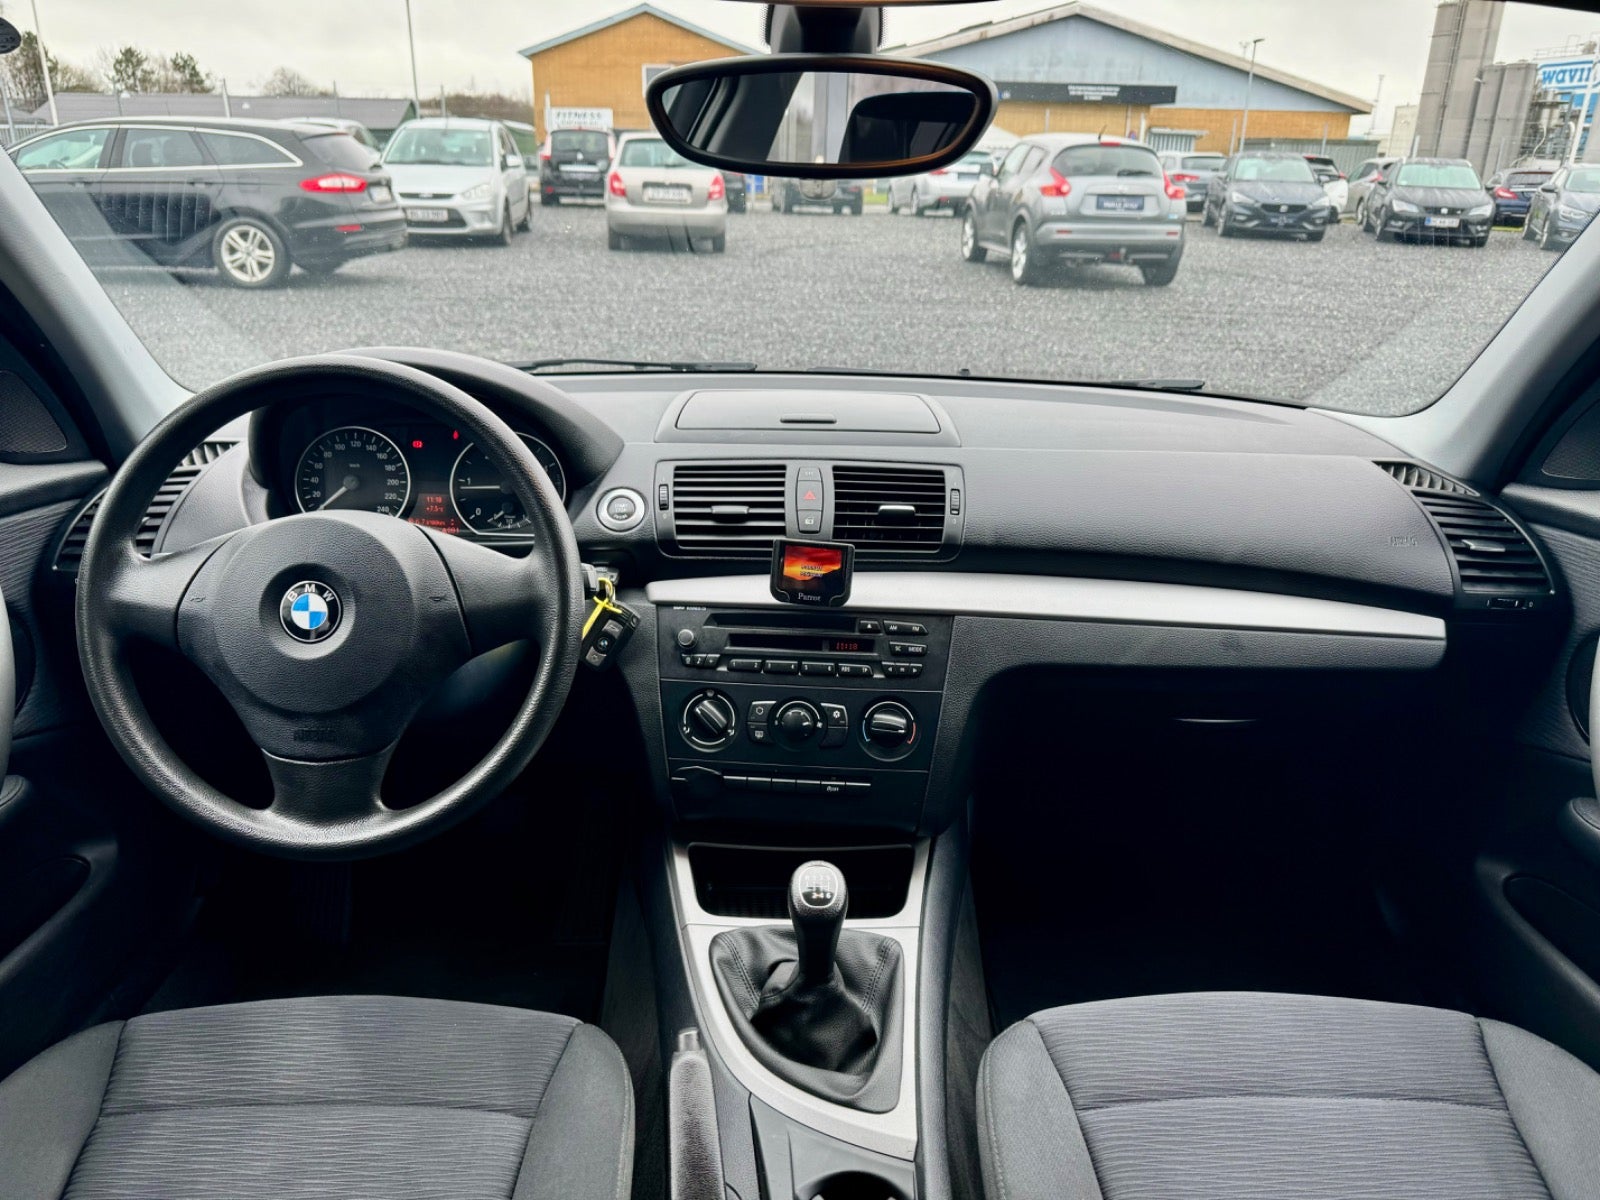 BMW 118d 2,0 Advantage Diesel modelår 2010 km 151000